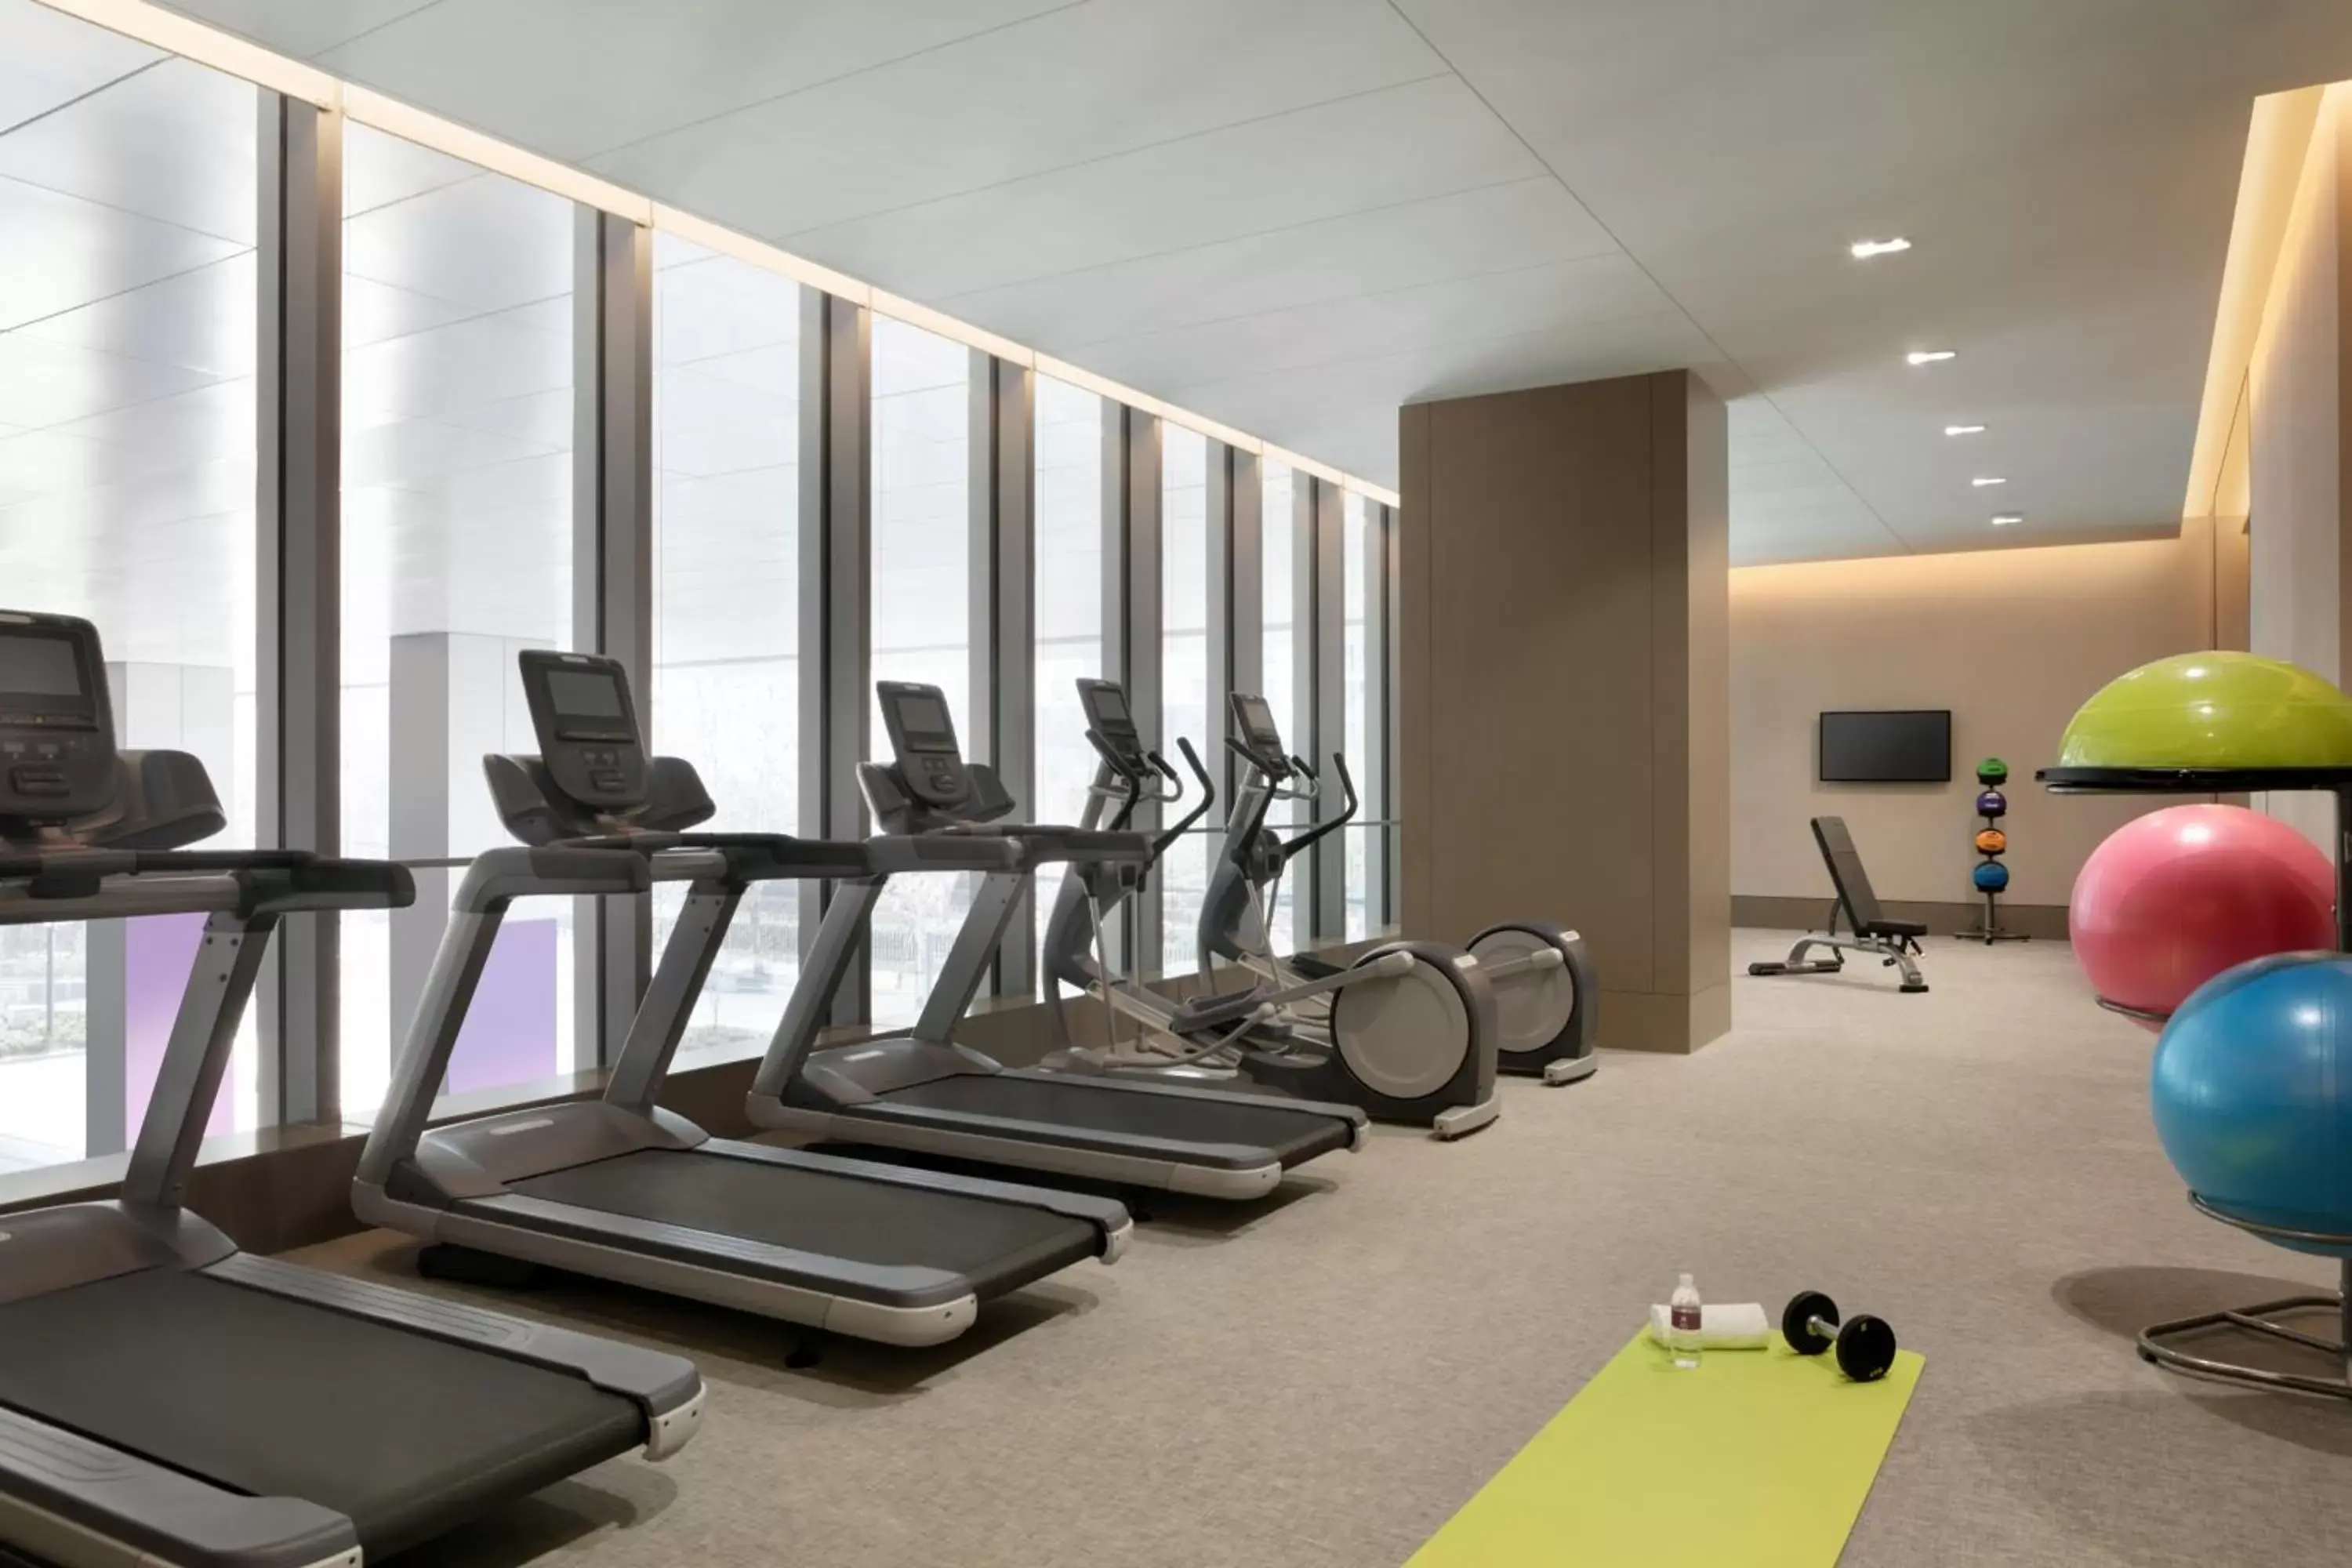 Fitness centre/facilities, Fitness Center/Facilities in Hyatt Place Shanghai Tianshan Plaza